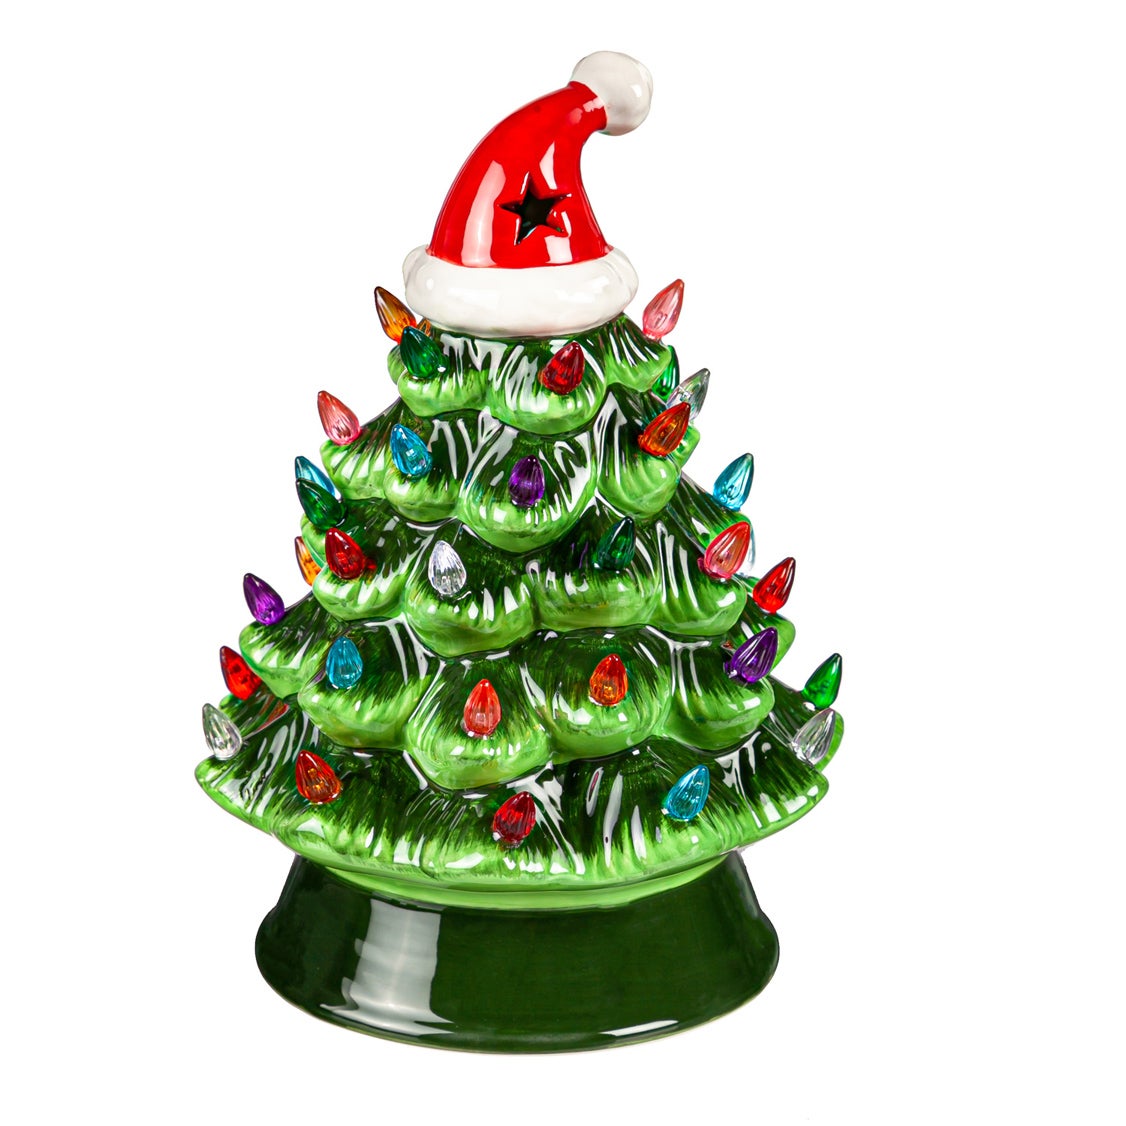 Lighted Ceramic Christmas Tree with Santa Hat